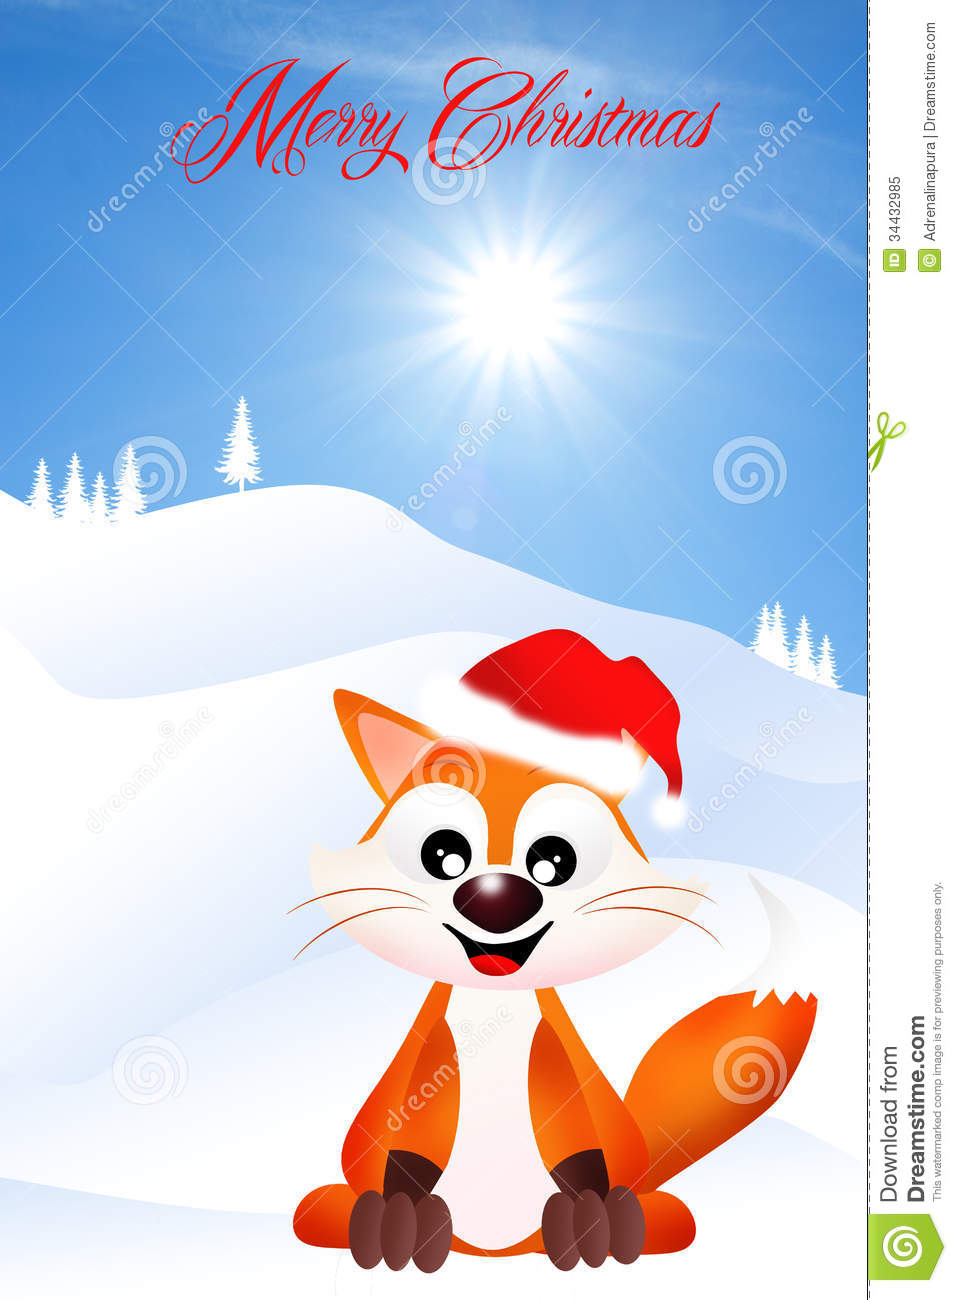 Red Fox At Christmas Royalty Free Stock Photo   Image  34432985